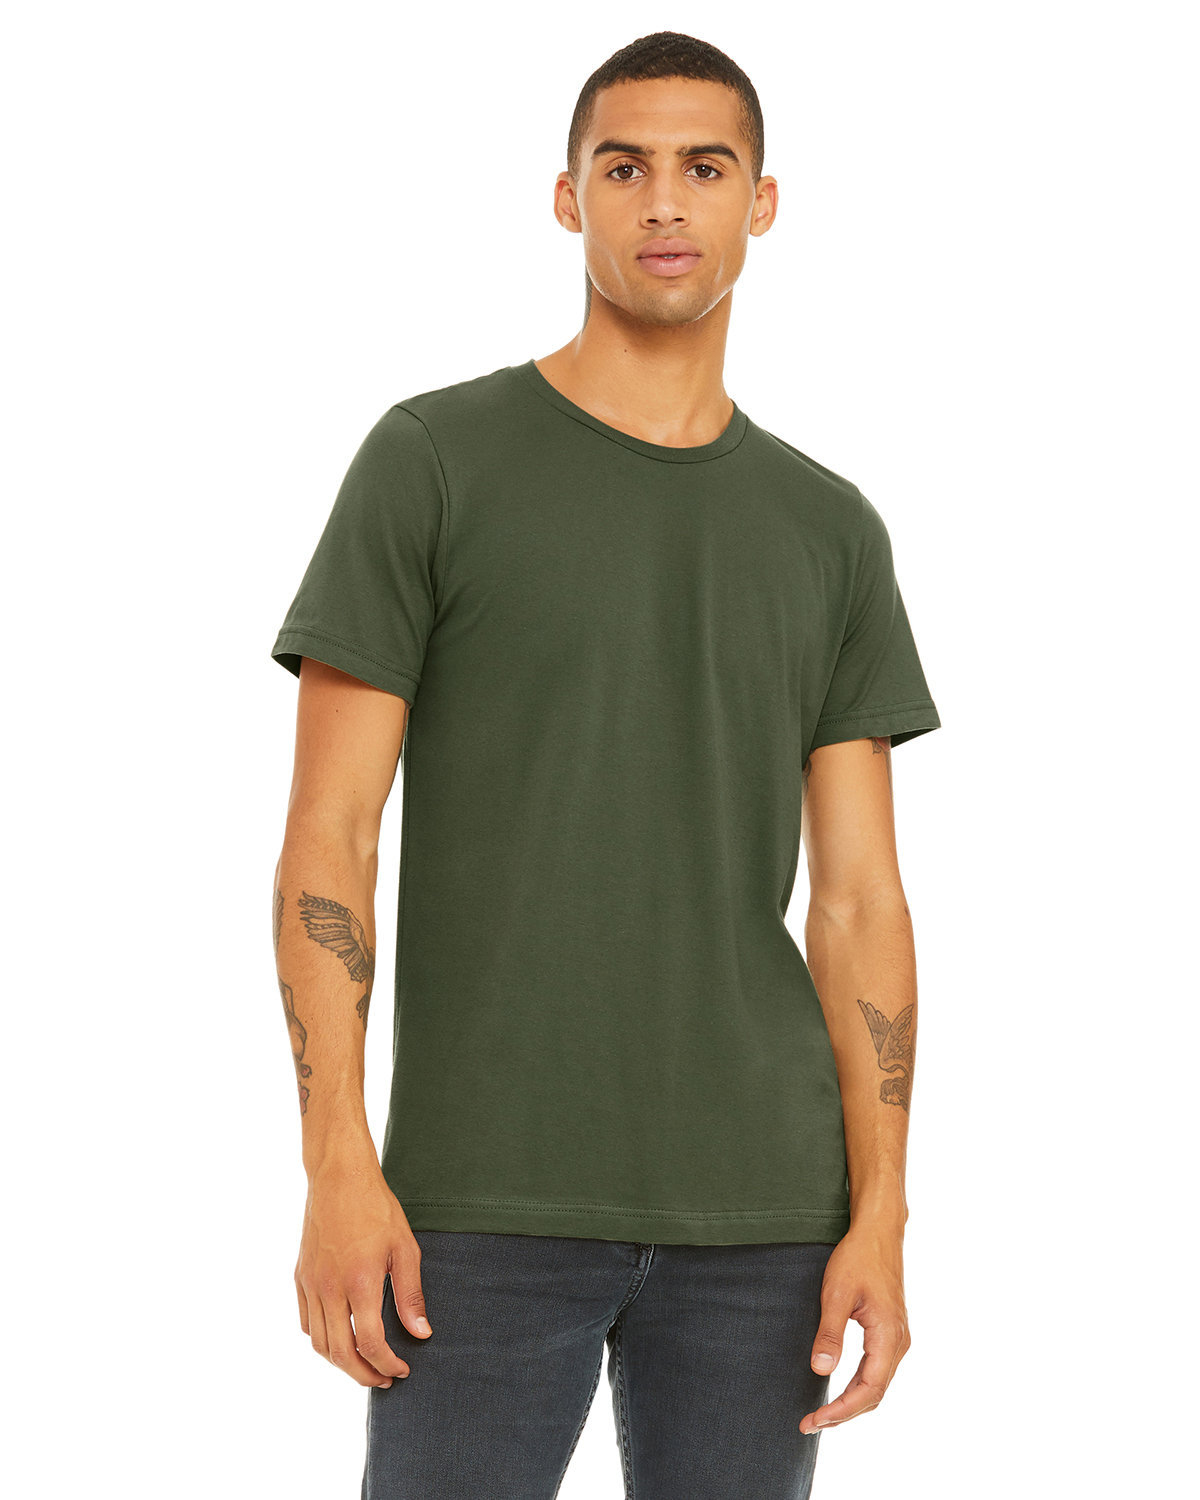 Bella + Canvas Unisex Jersey T-Shirt MILITARY GREEN 